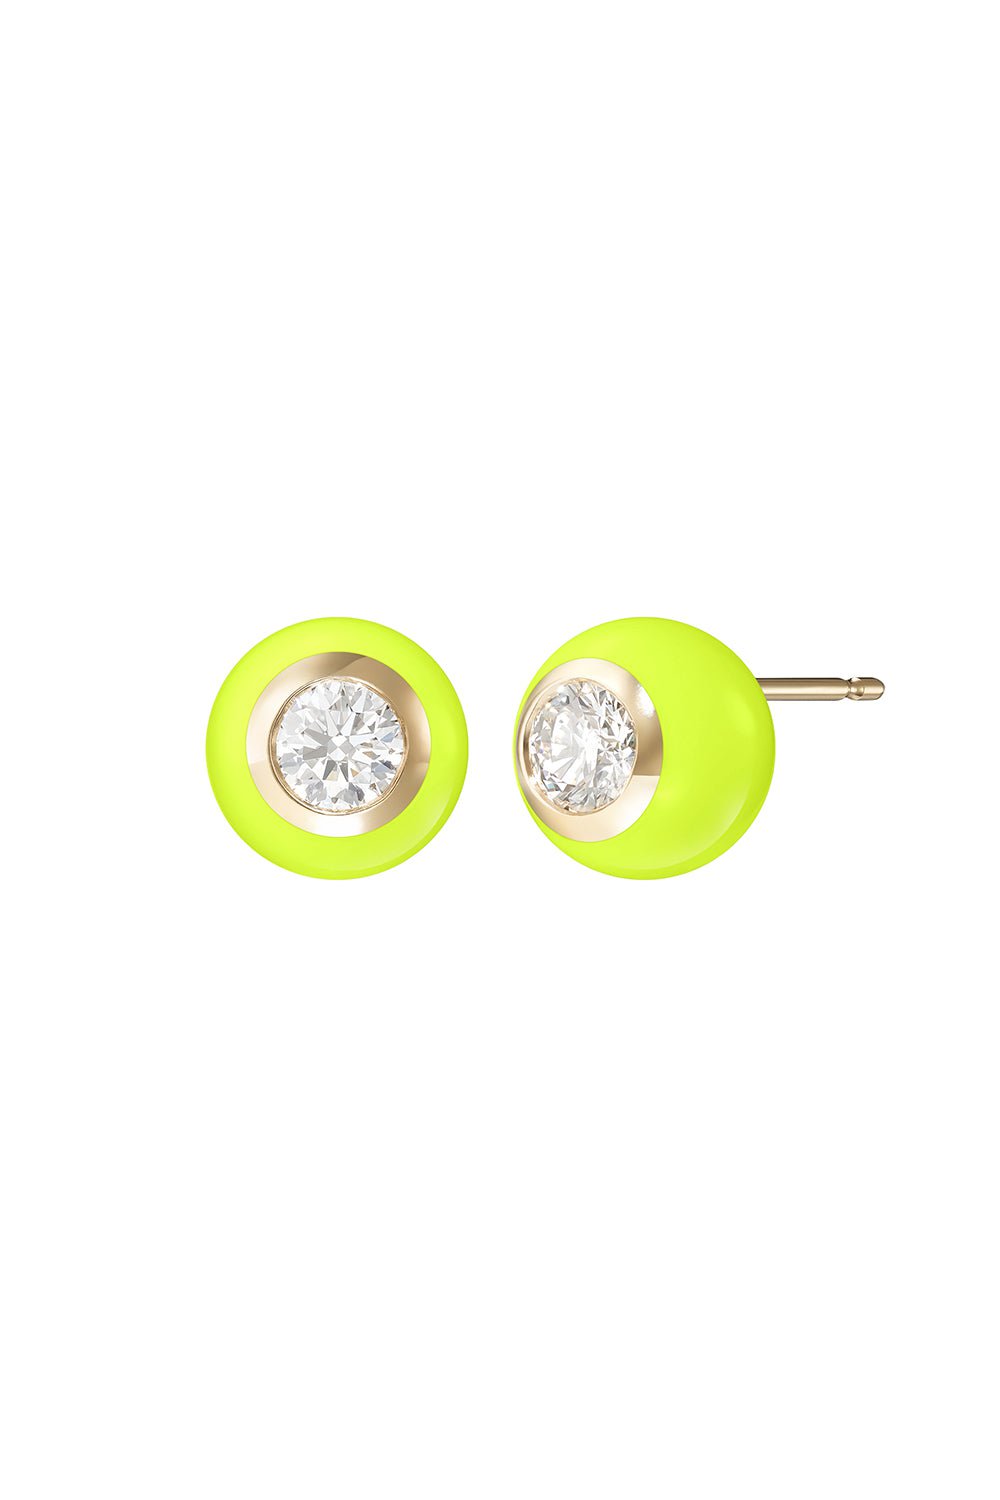 MELISSA KAYE-Neon Yellow Large Audrey Stud Earrings-YELLOW GOLD